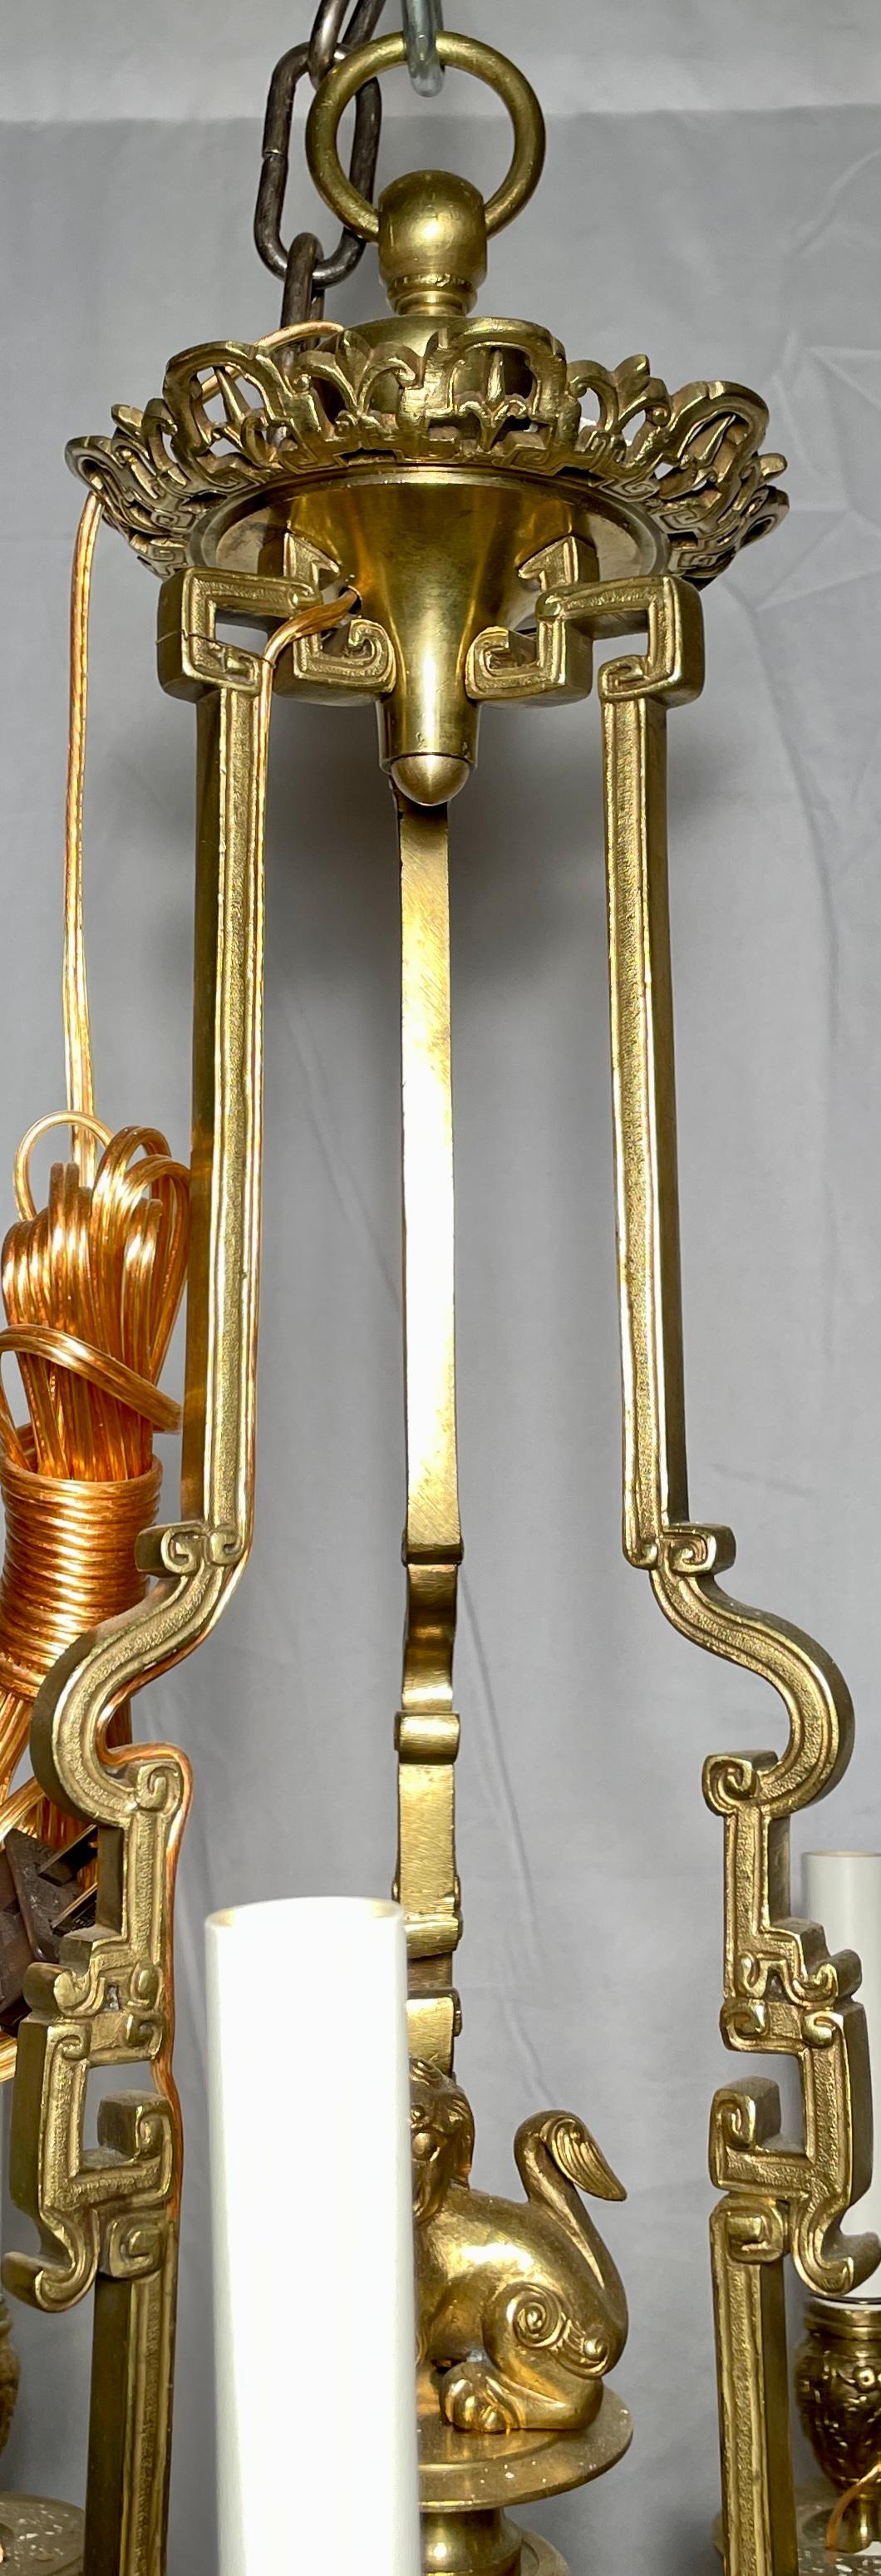 Antique French gold bronze 10 light chandelier with Greek Key Design, Circa 1890.